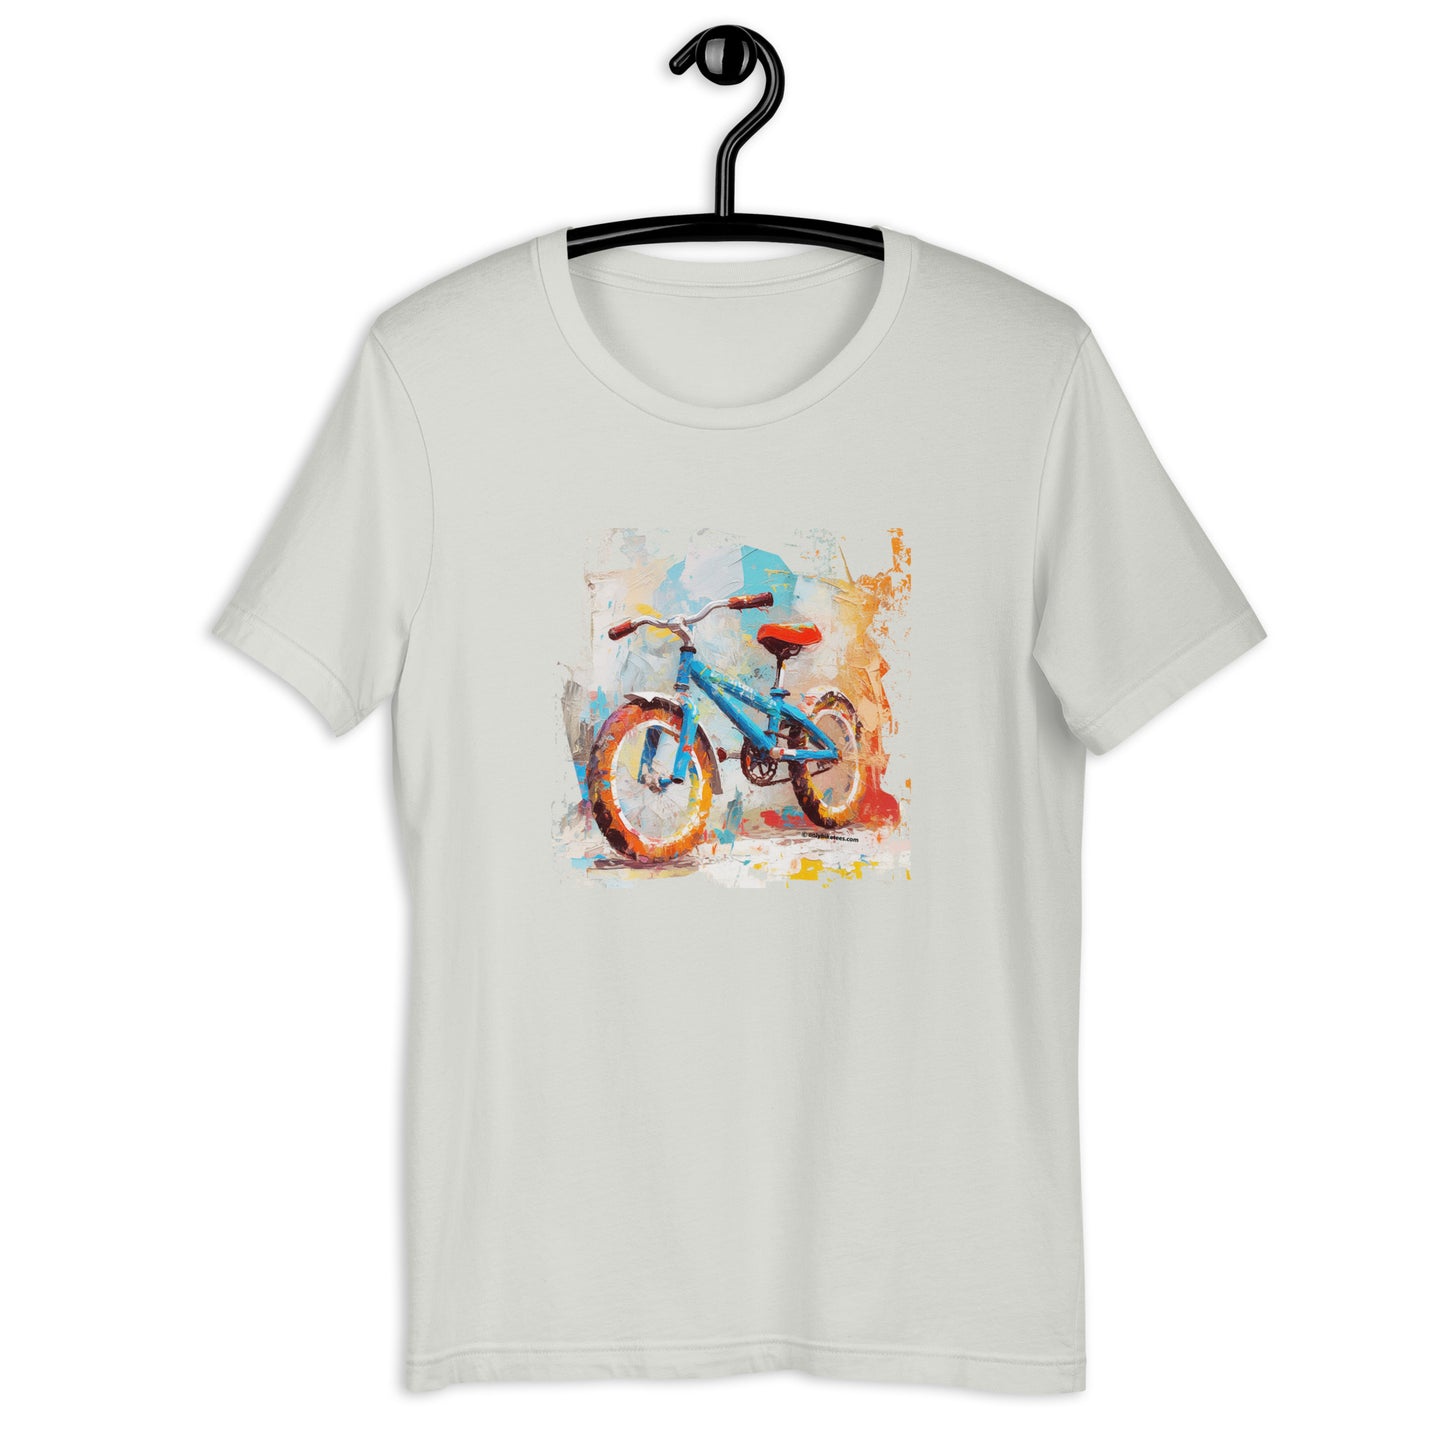 Painted Bike Unisex t-shirt